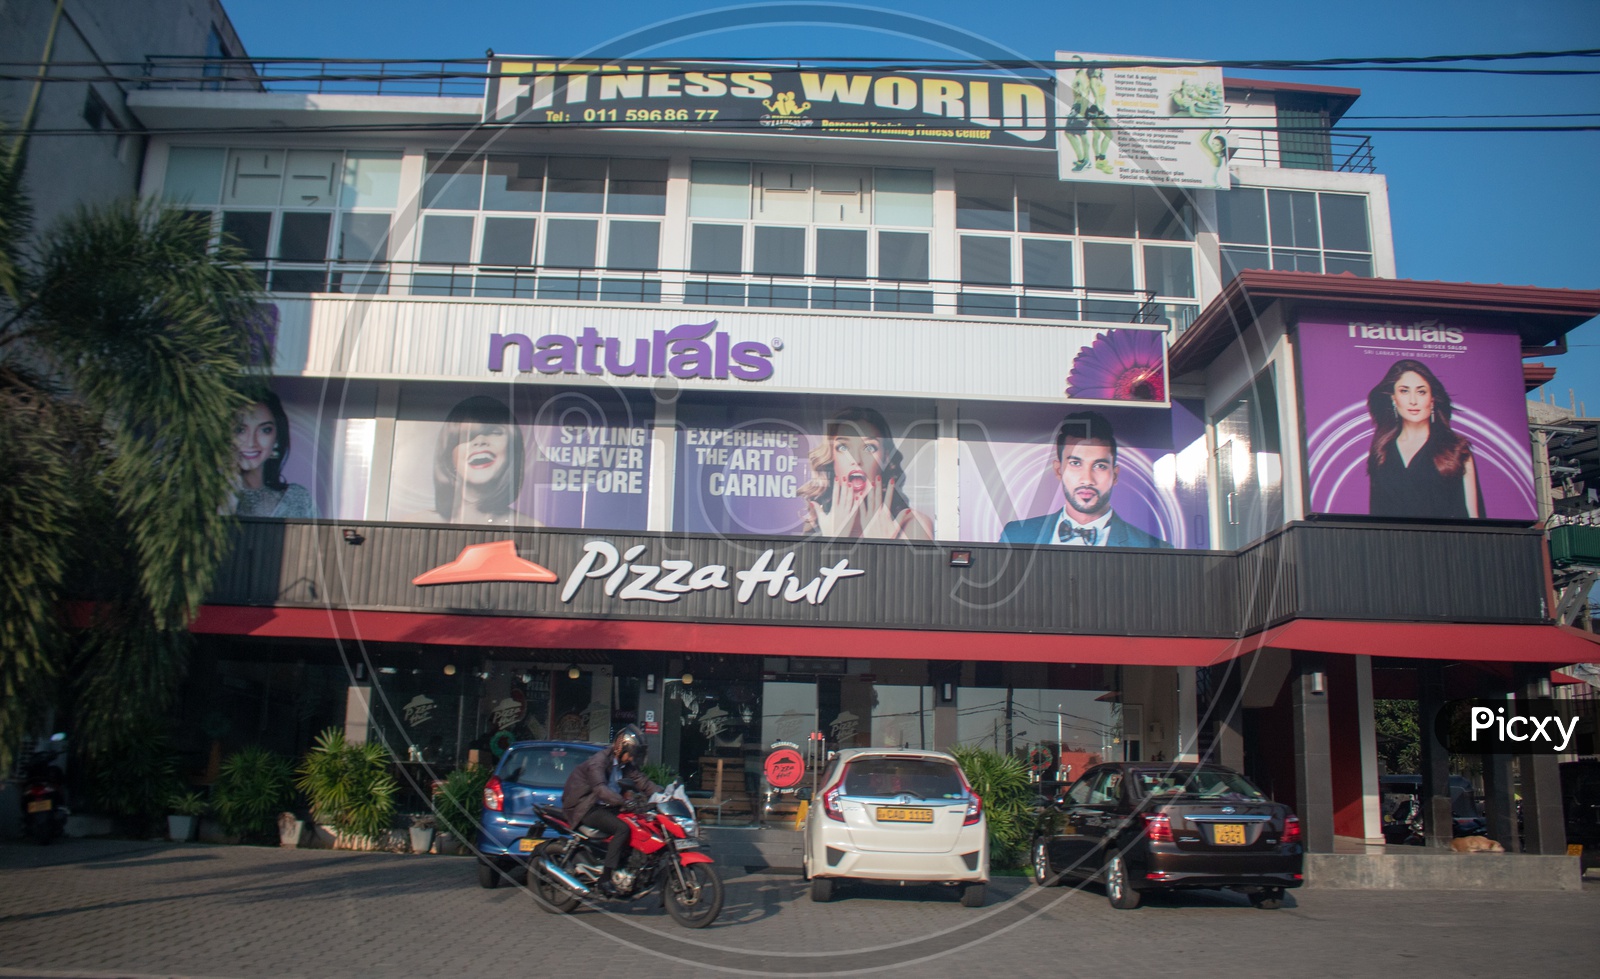 Pizza Hut / Naturals Name Boards In  Colombo , Sri Lanka